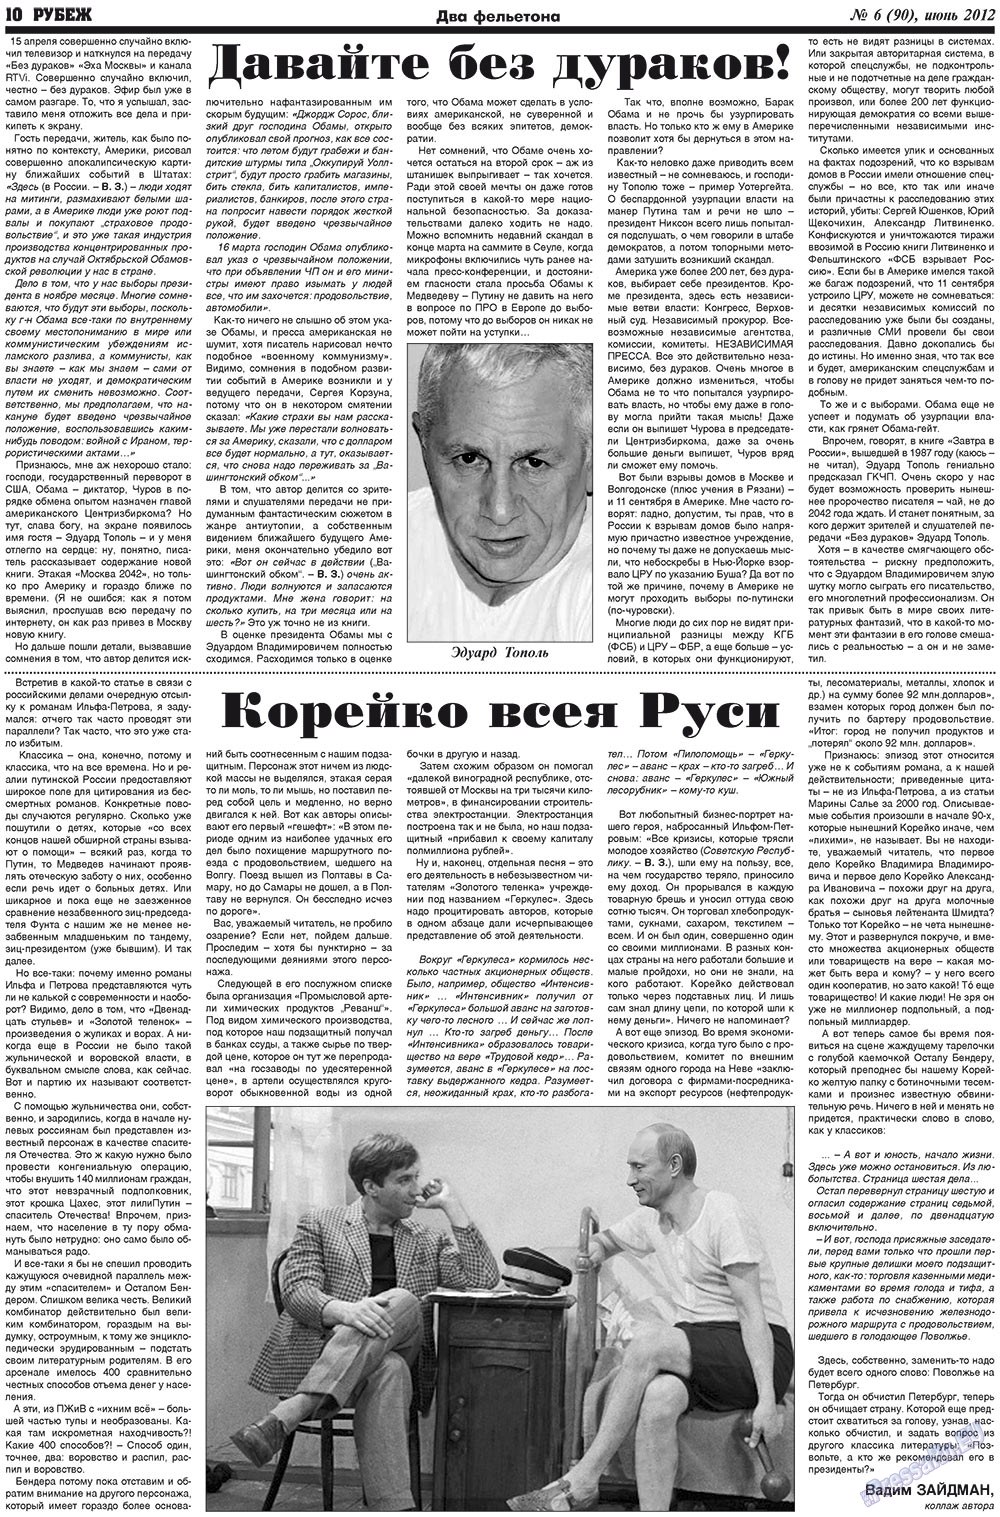 Рубеж, газета. 2012 №6 стр.10